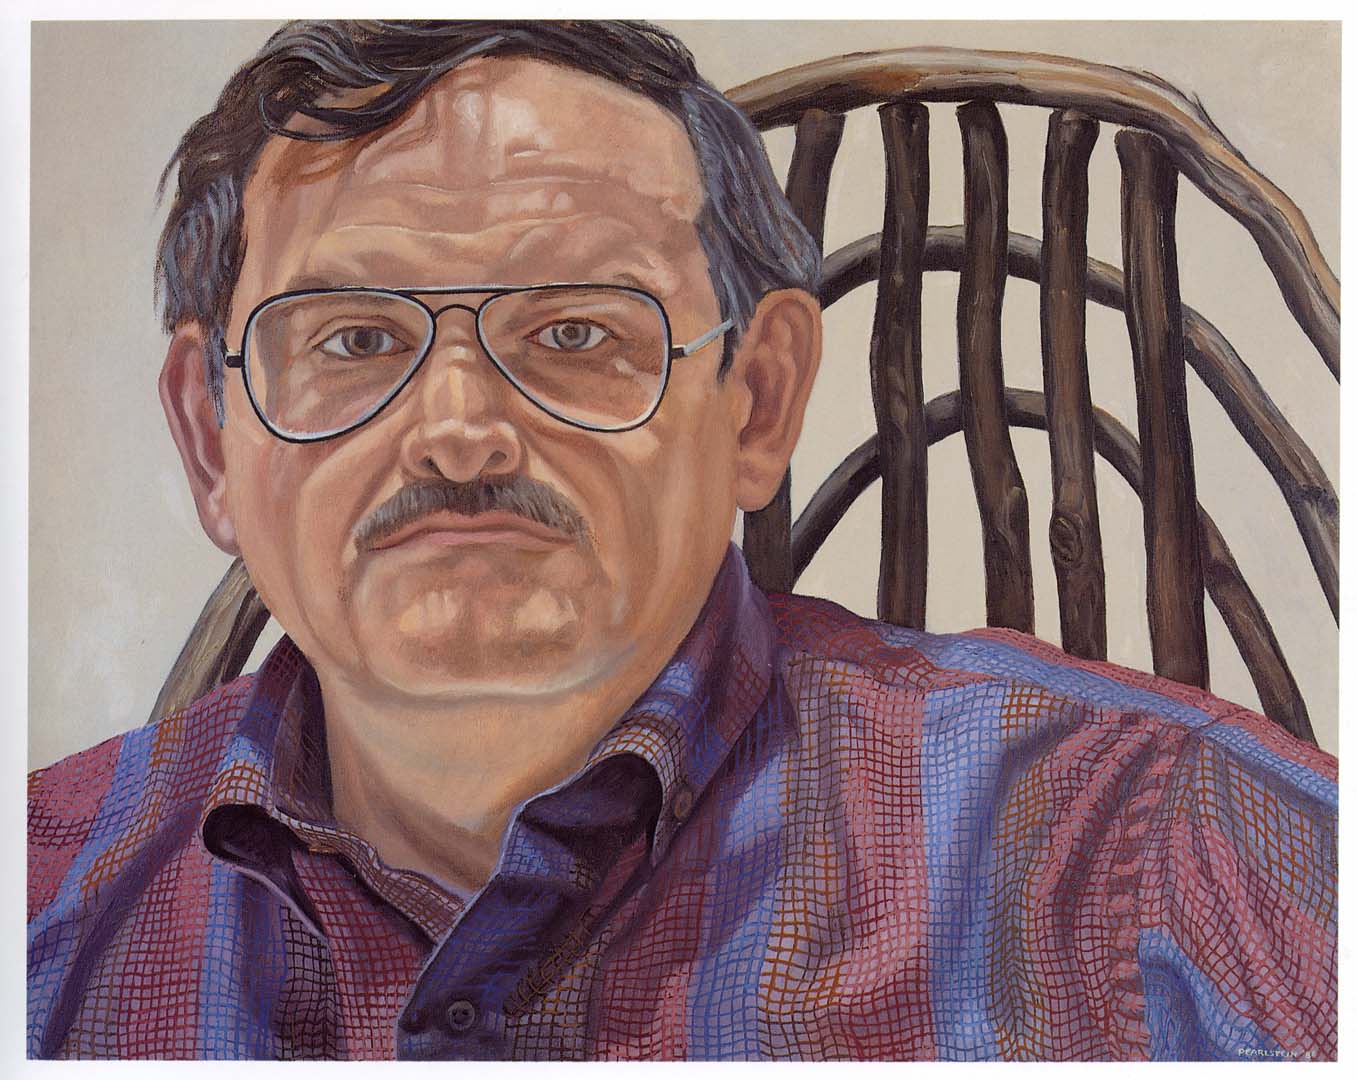 1986 Portrait of Richard Haas Oil on canvas 23 x 29